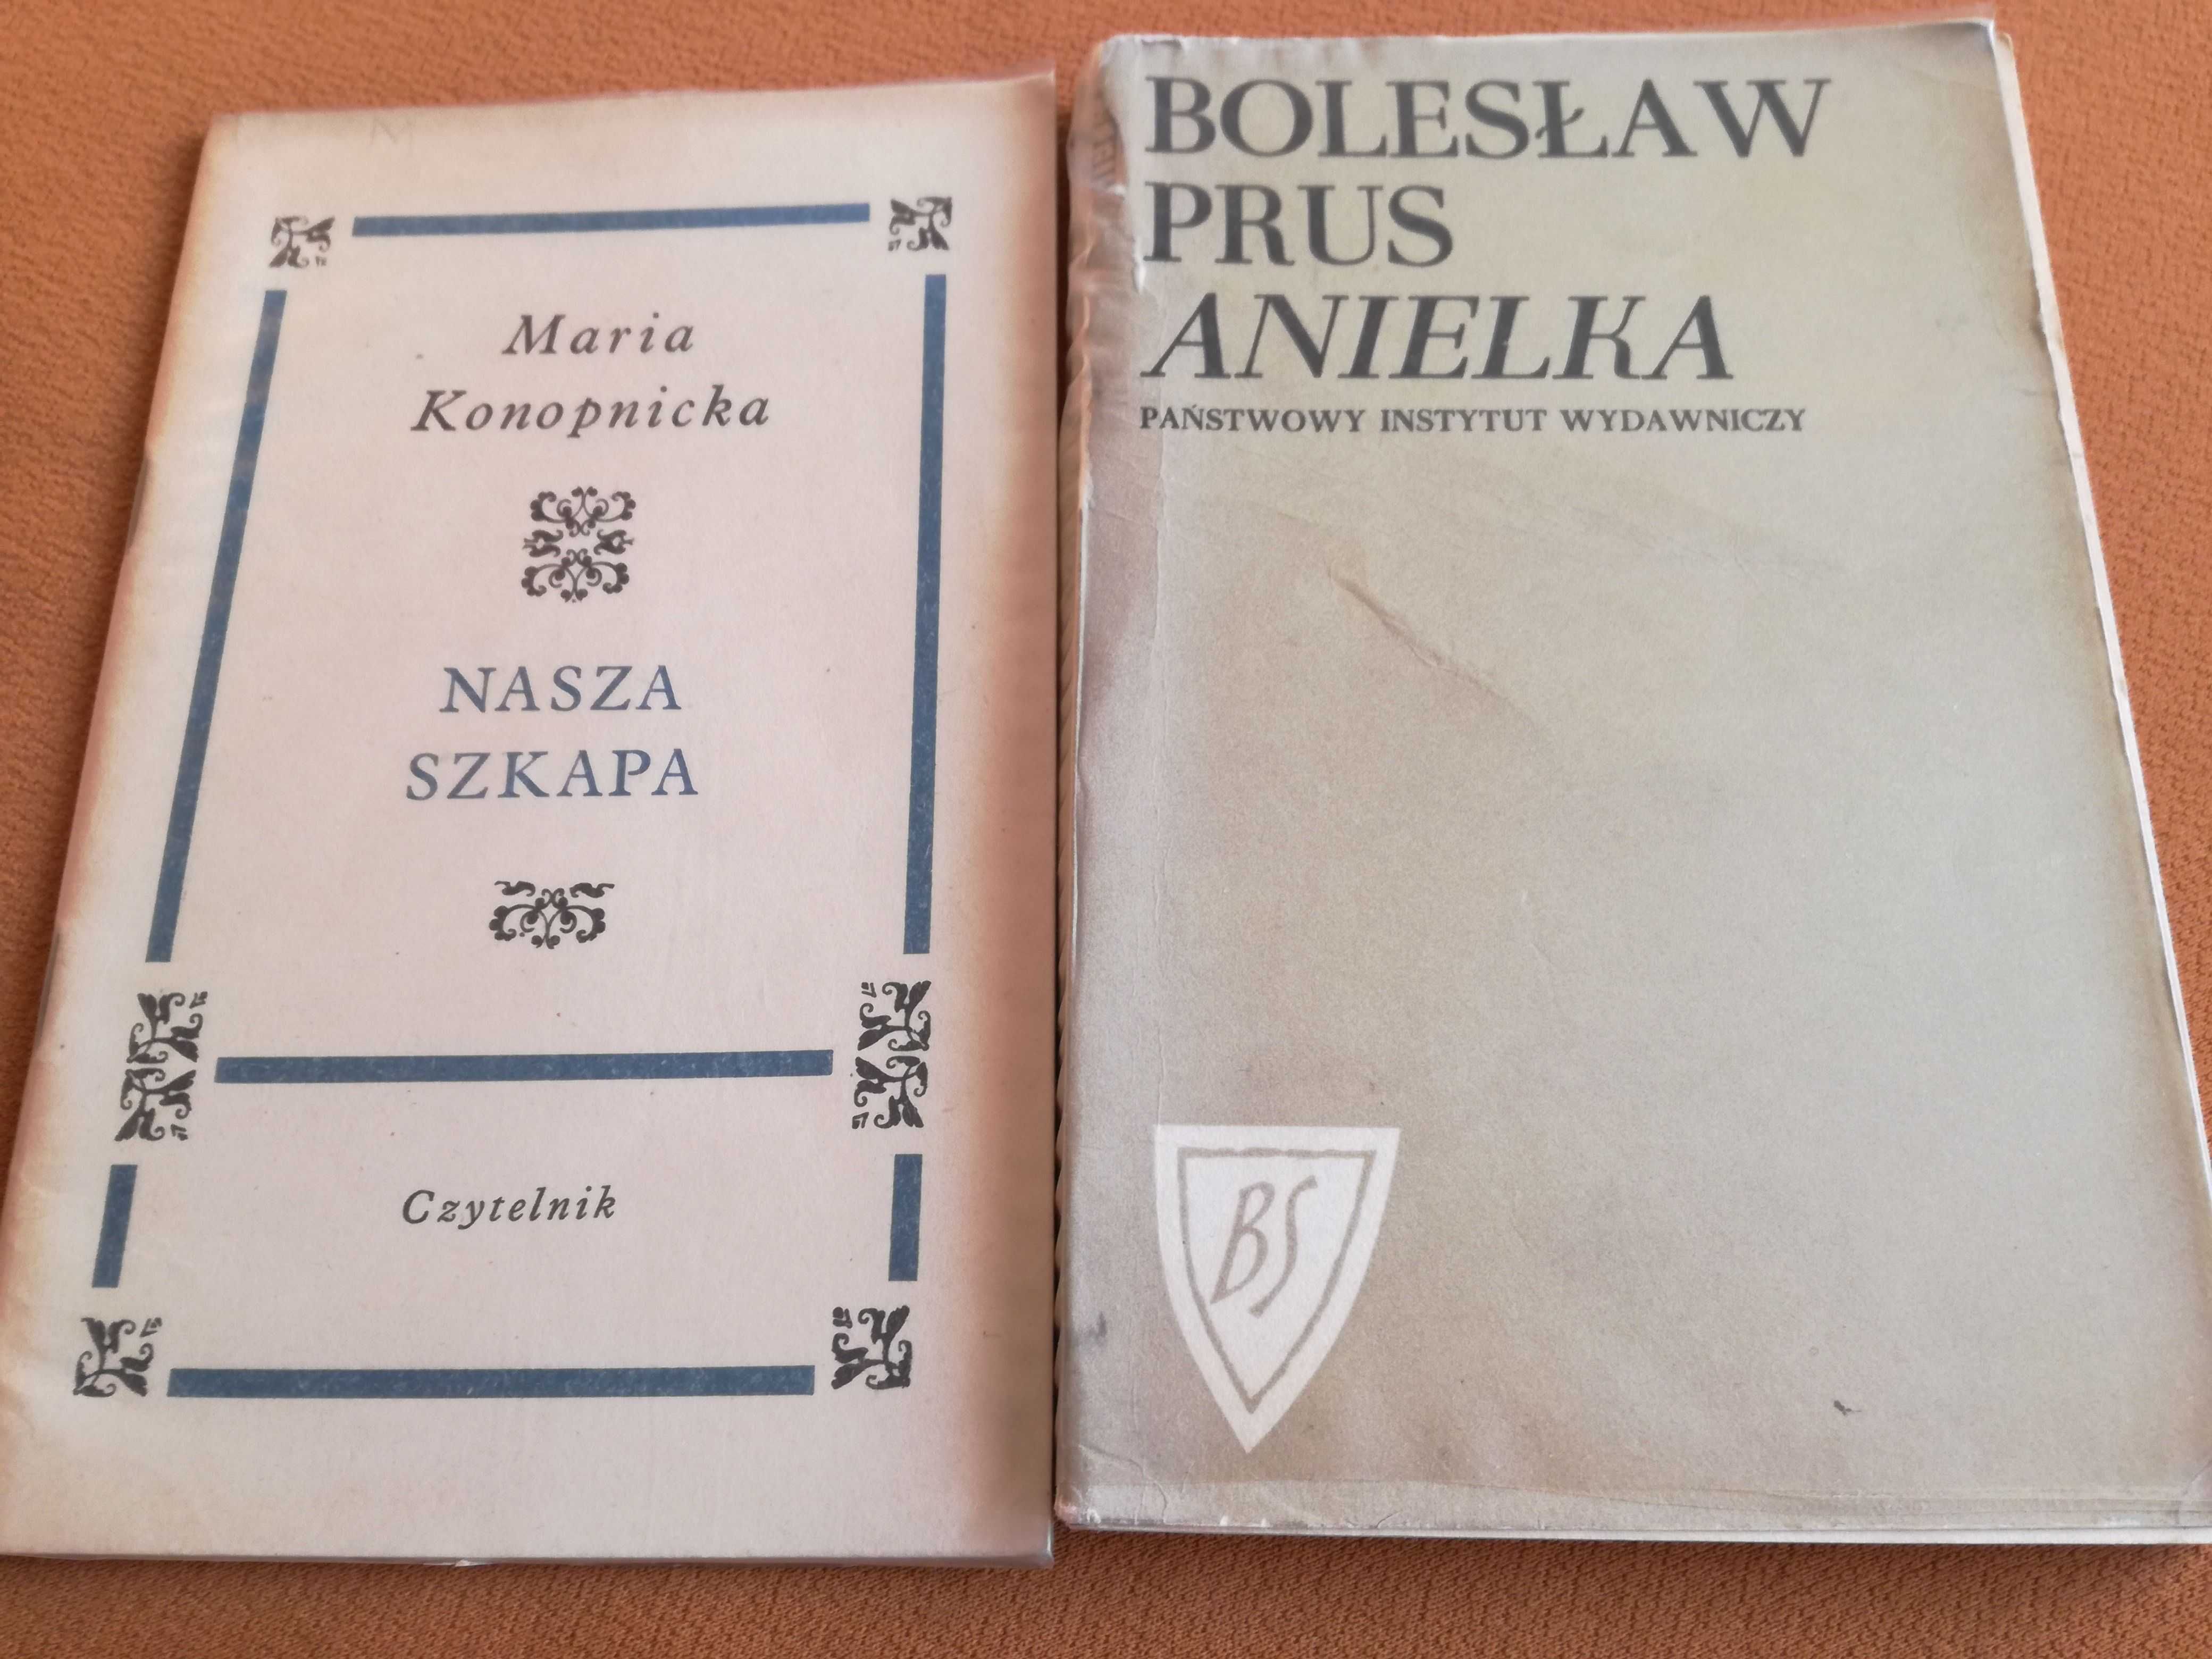 Nasza szkapa - Maria Konopnicka.Anielka-Bolesław Prus.Lektura.